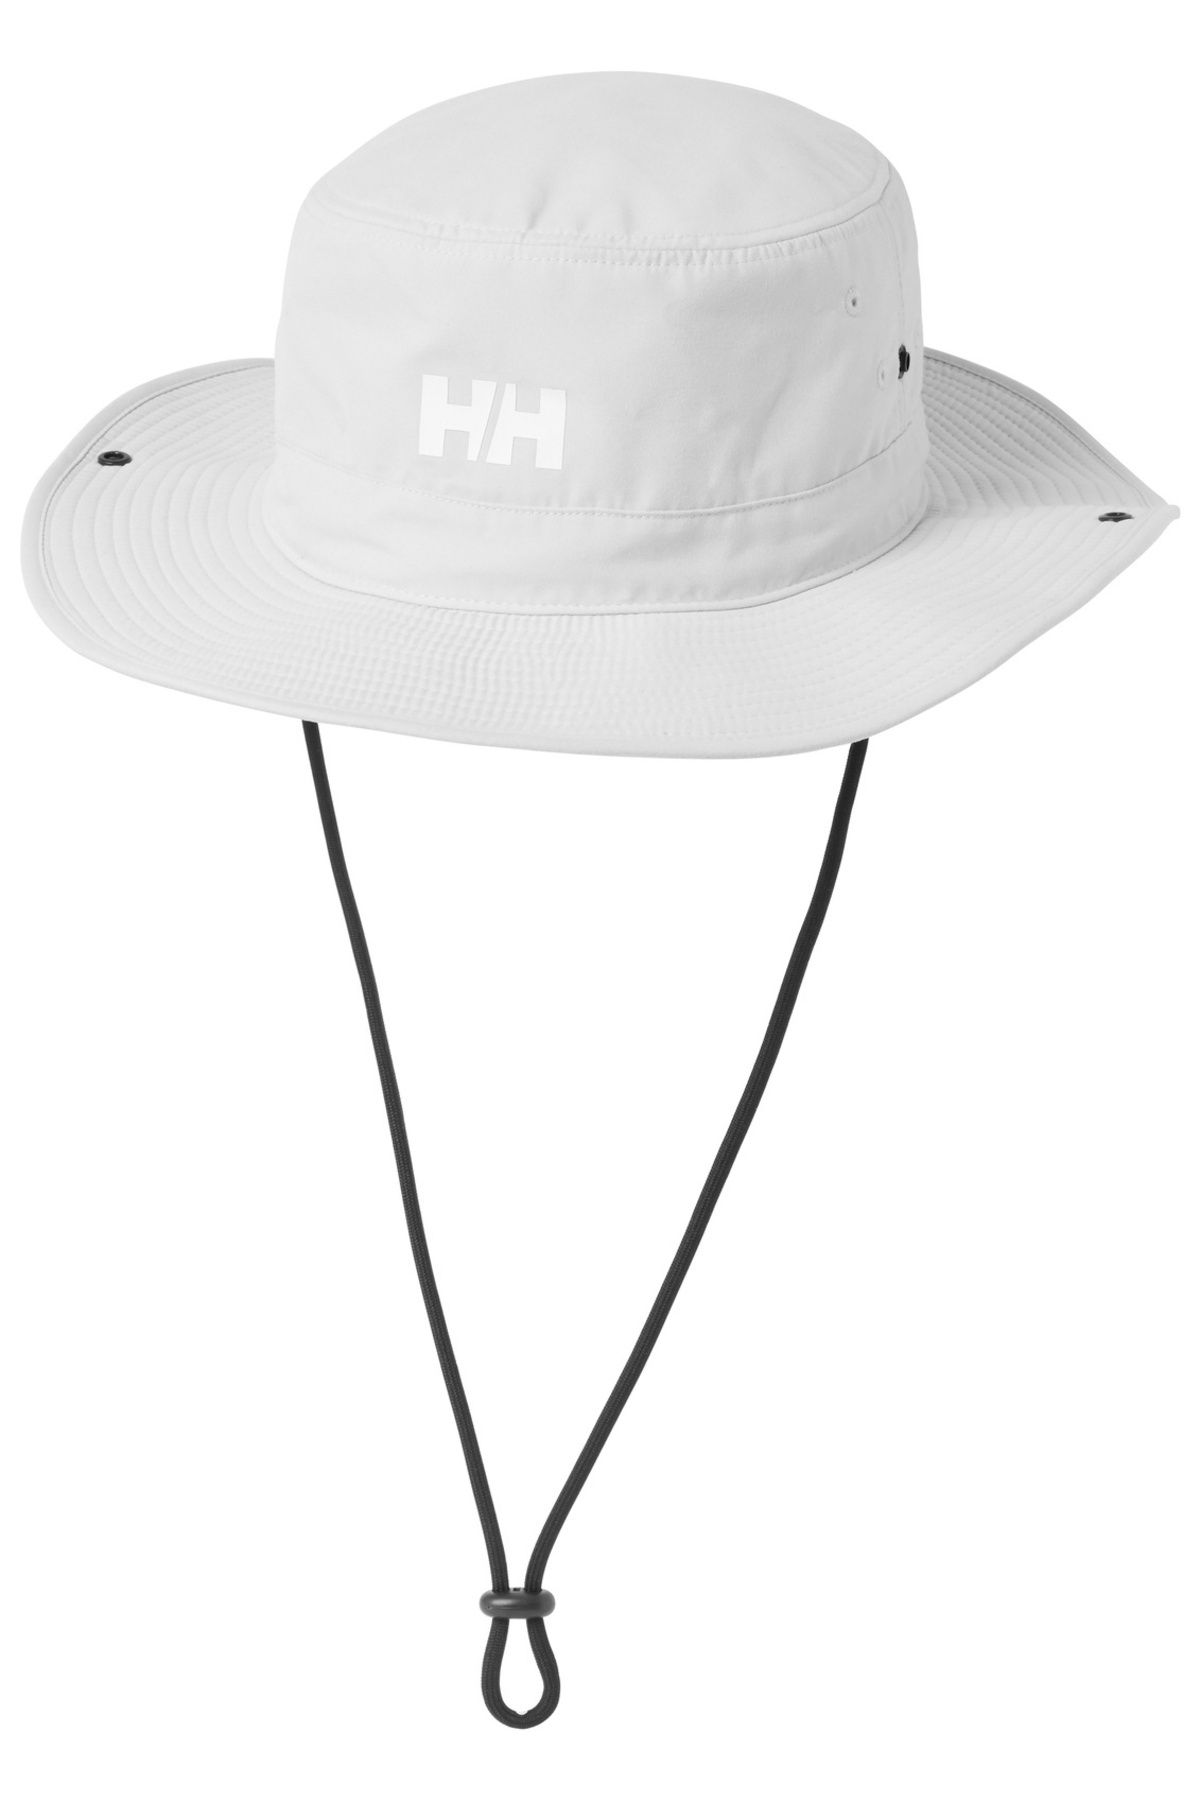 Helly Hansen Helly Hansen Crew Sun Şapka Unısex Gri Şapka Hha.67521-hha.853